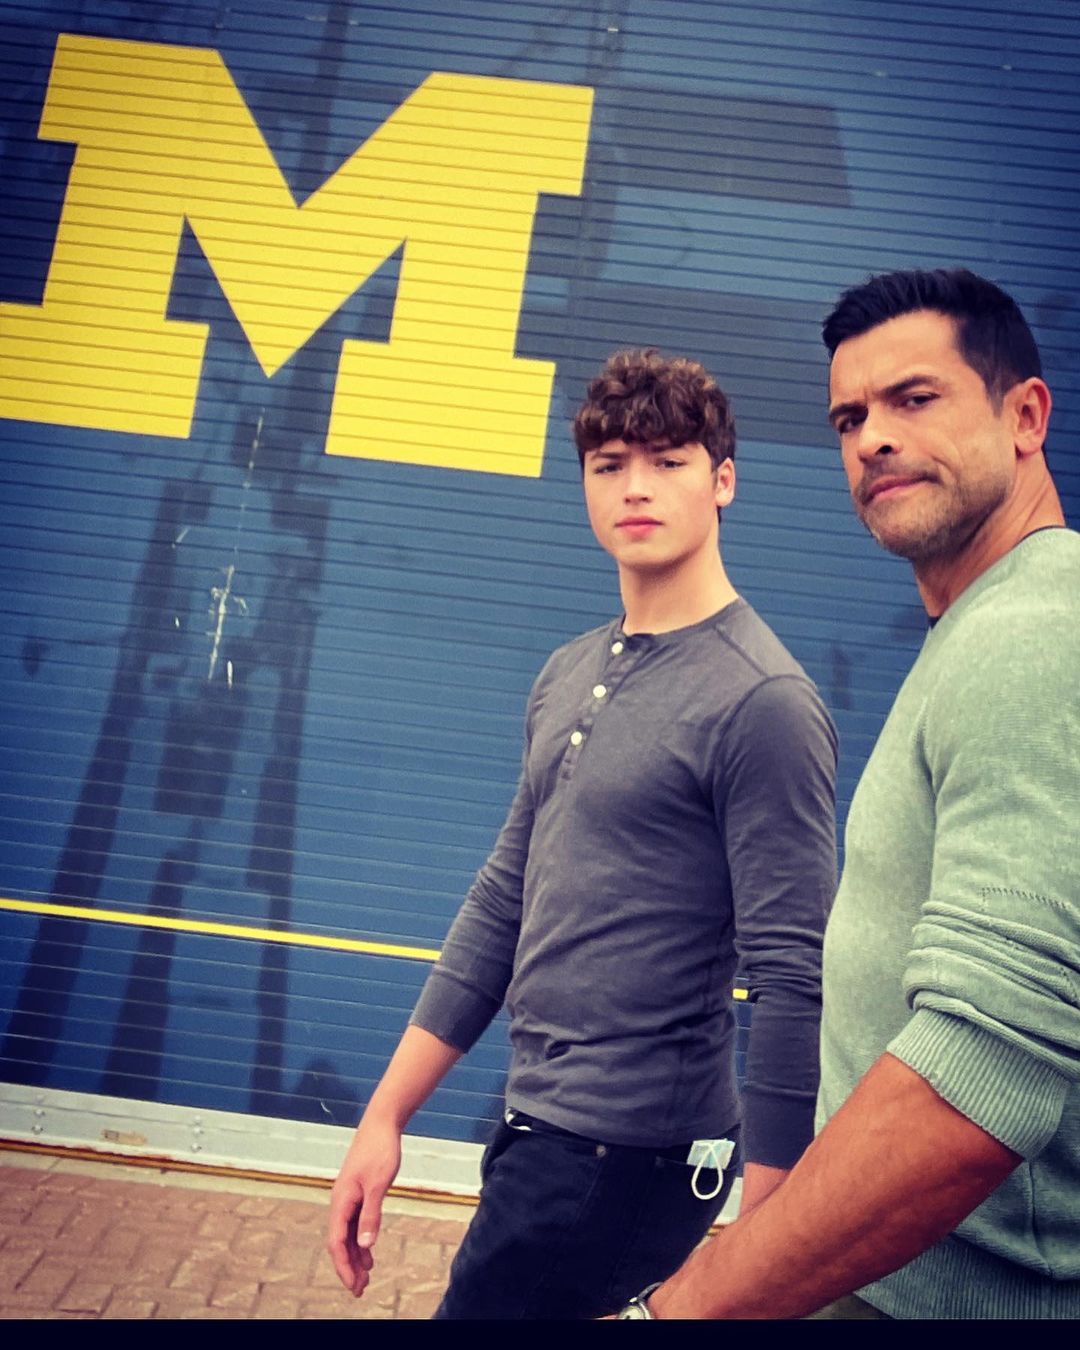 Joaquin Antonio Consuelo and Mark Consuelos walk past University of Michigan's yellow Block 'M' logo